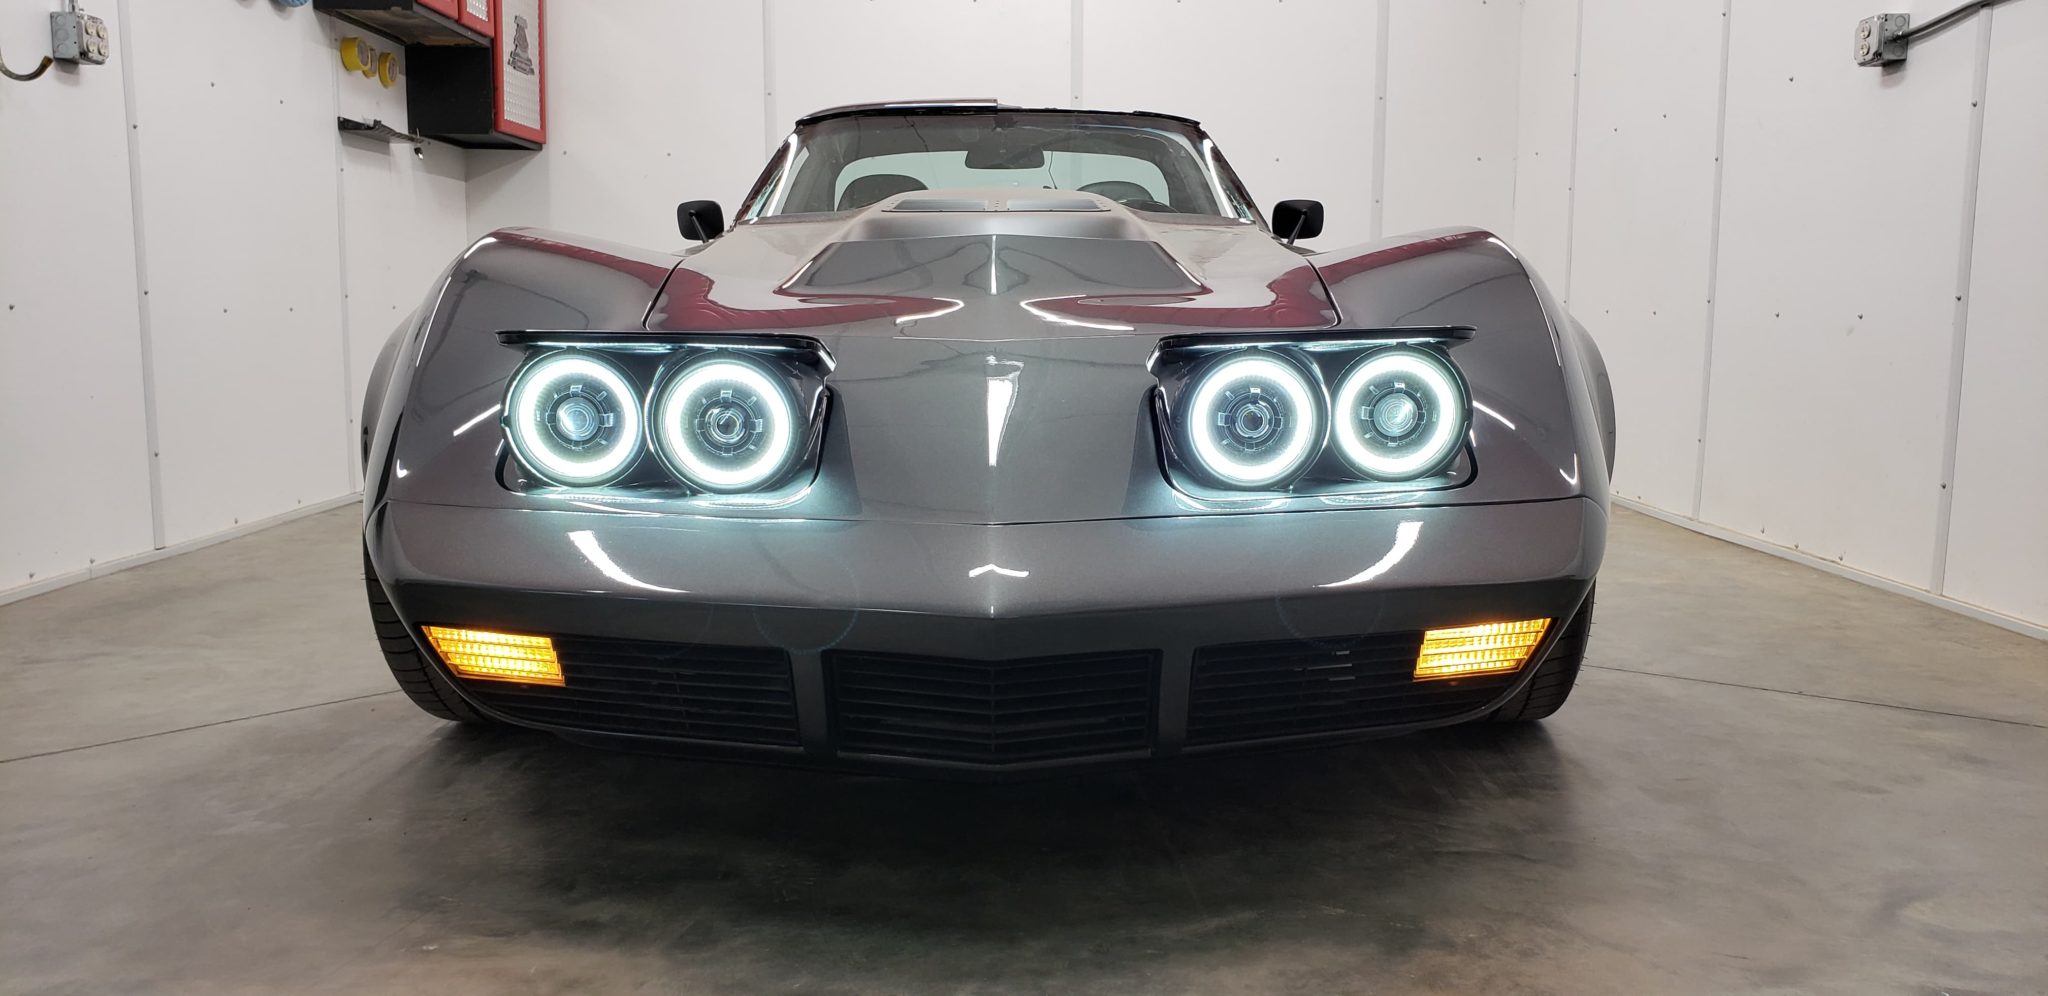 c3 corvette led headlights.